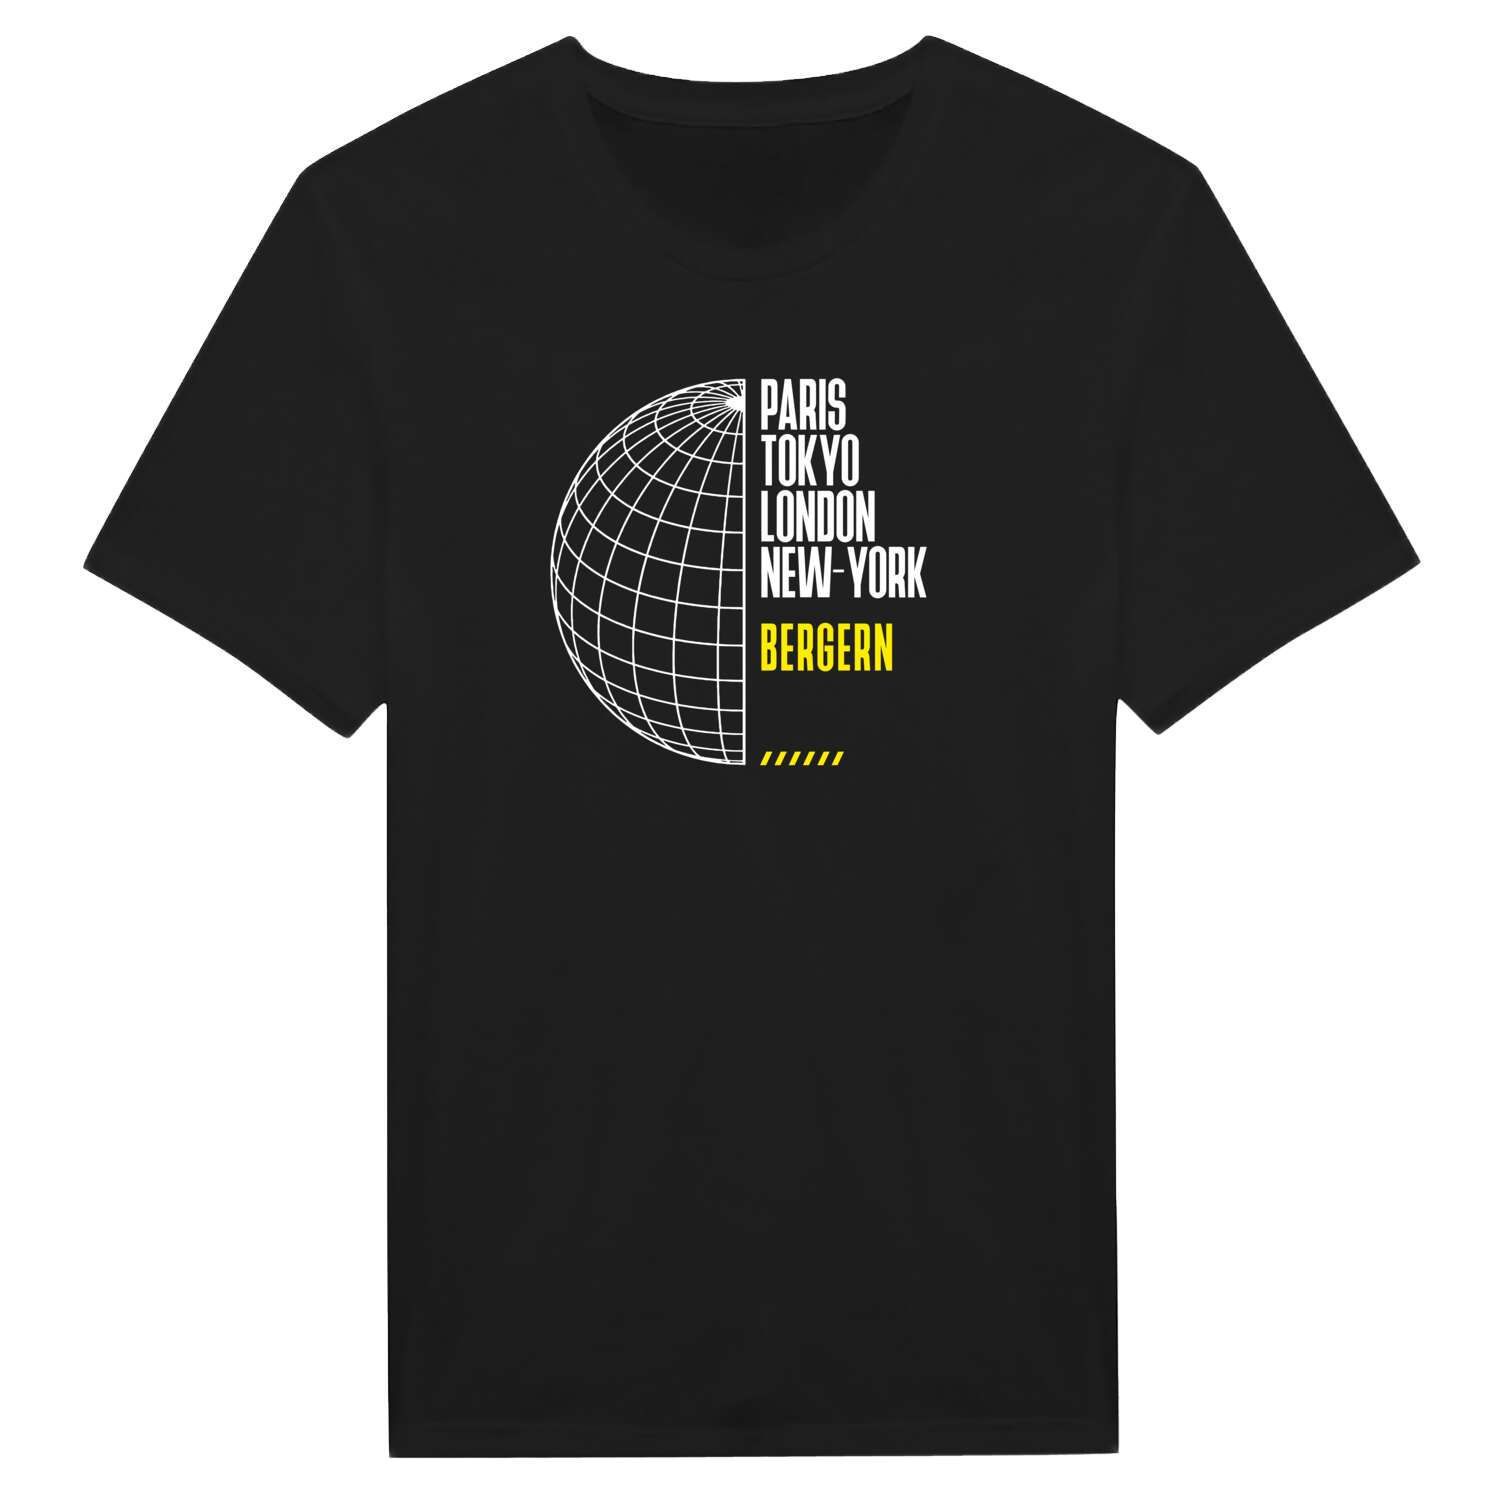 Bergern T-Shirt »Paris Tokyo London«